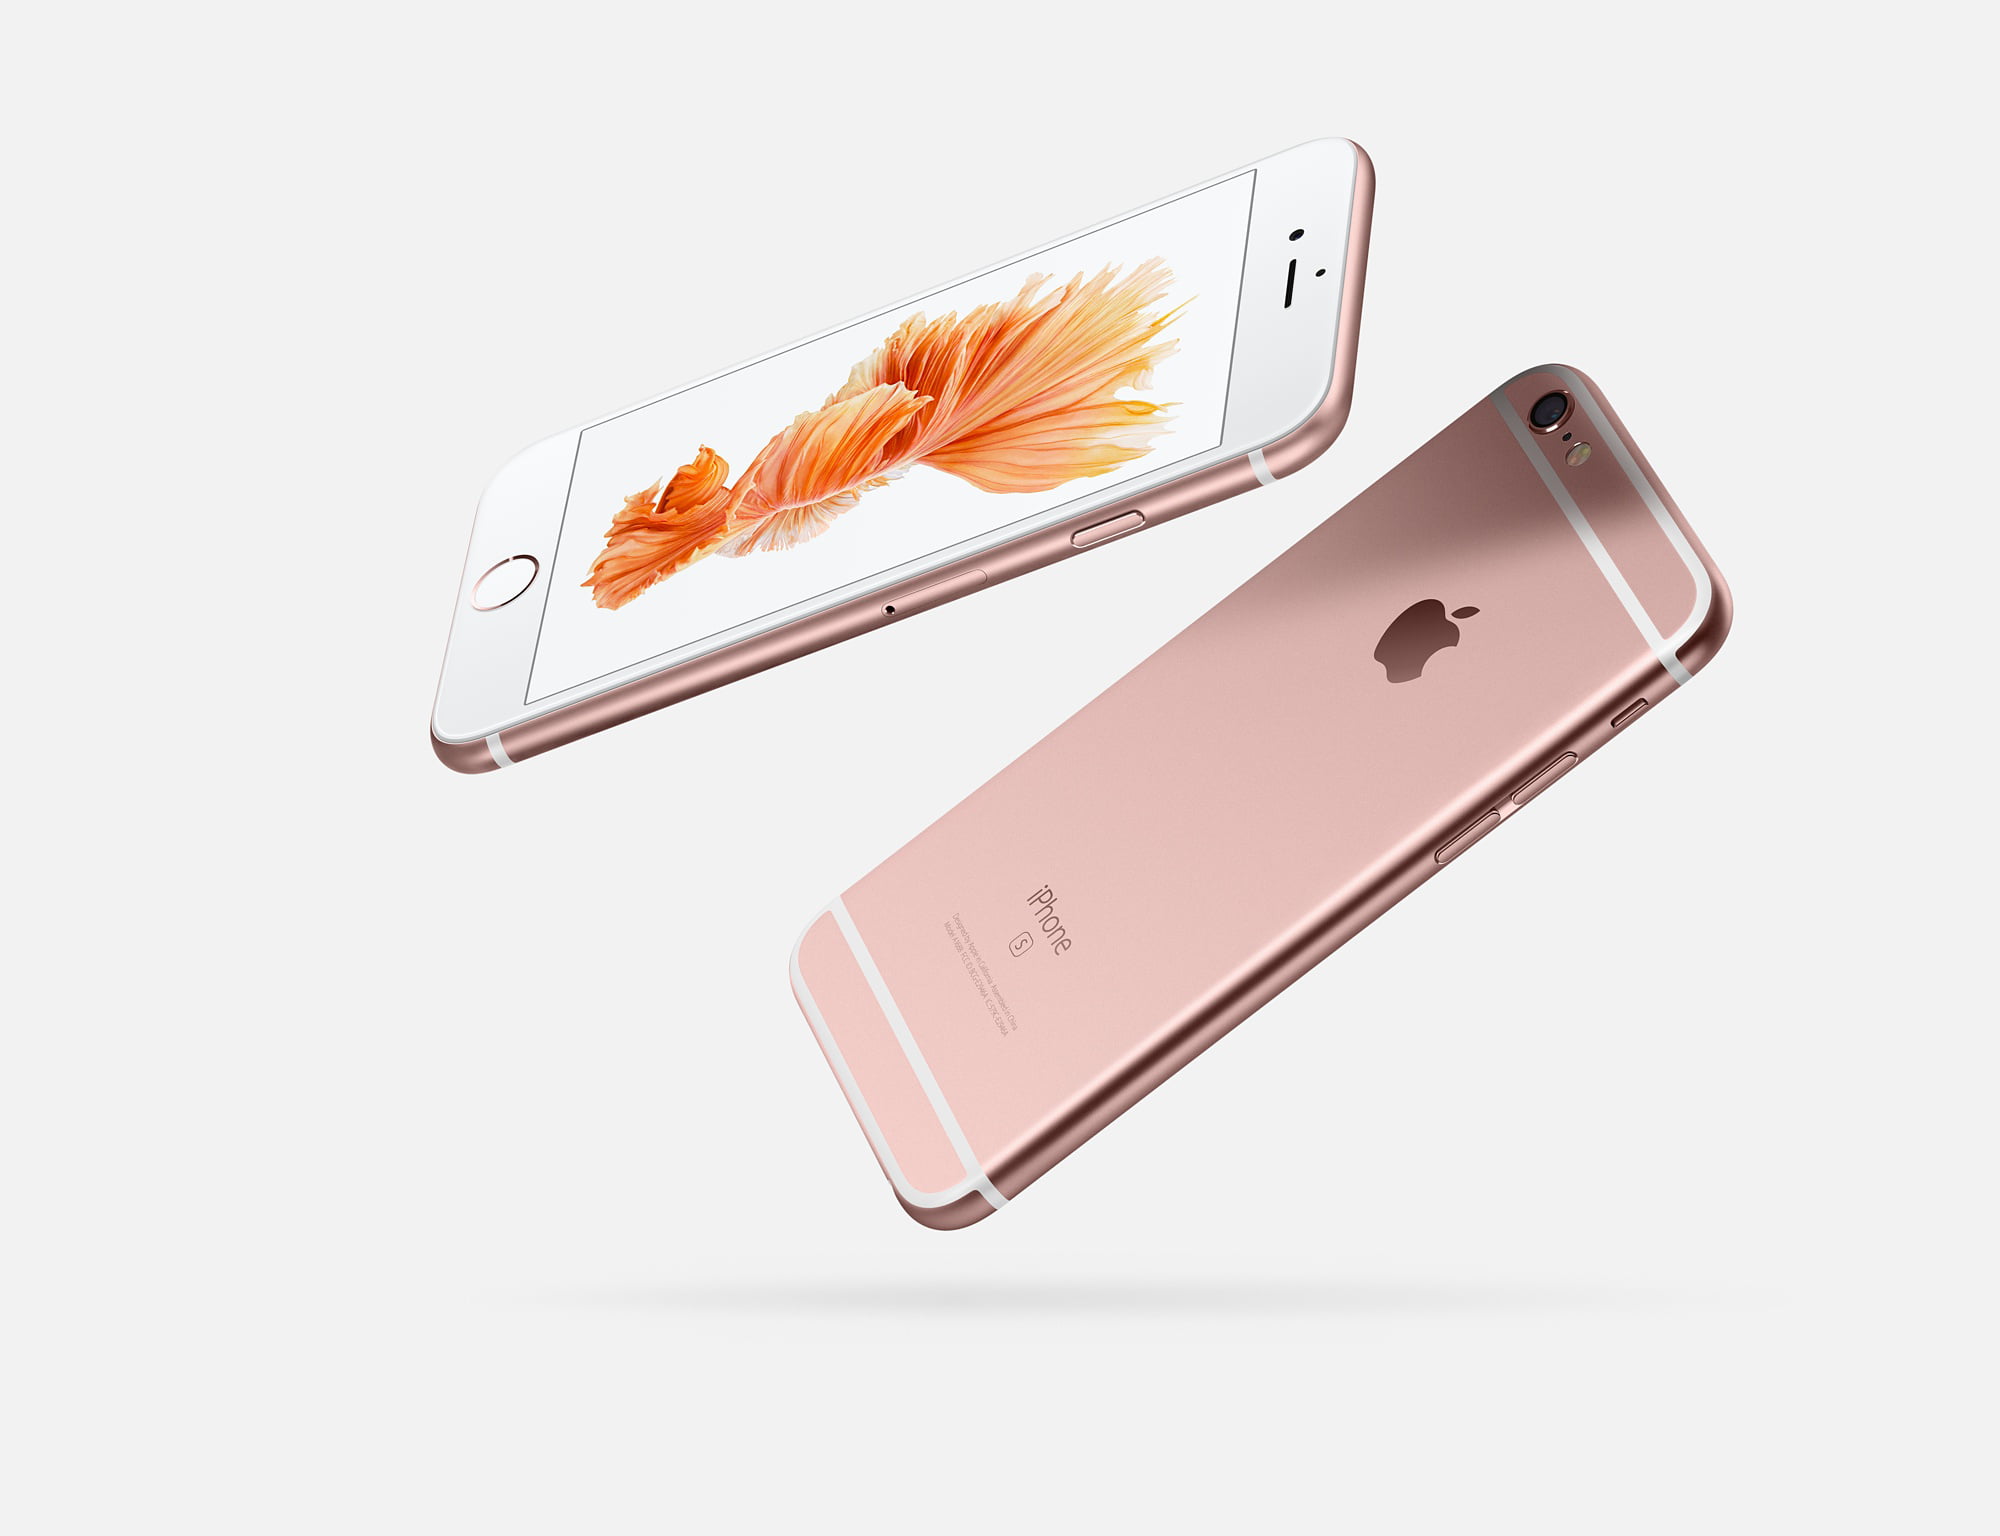 Apple iPhone 6S Plus 16GB Unlocked Phone - Gold - Walmart.com